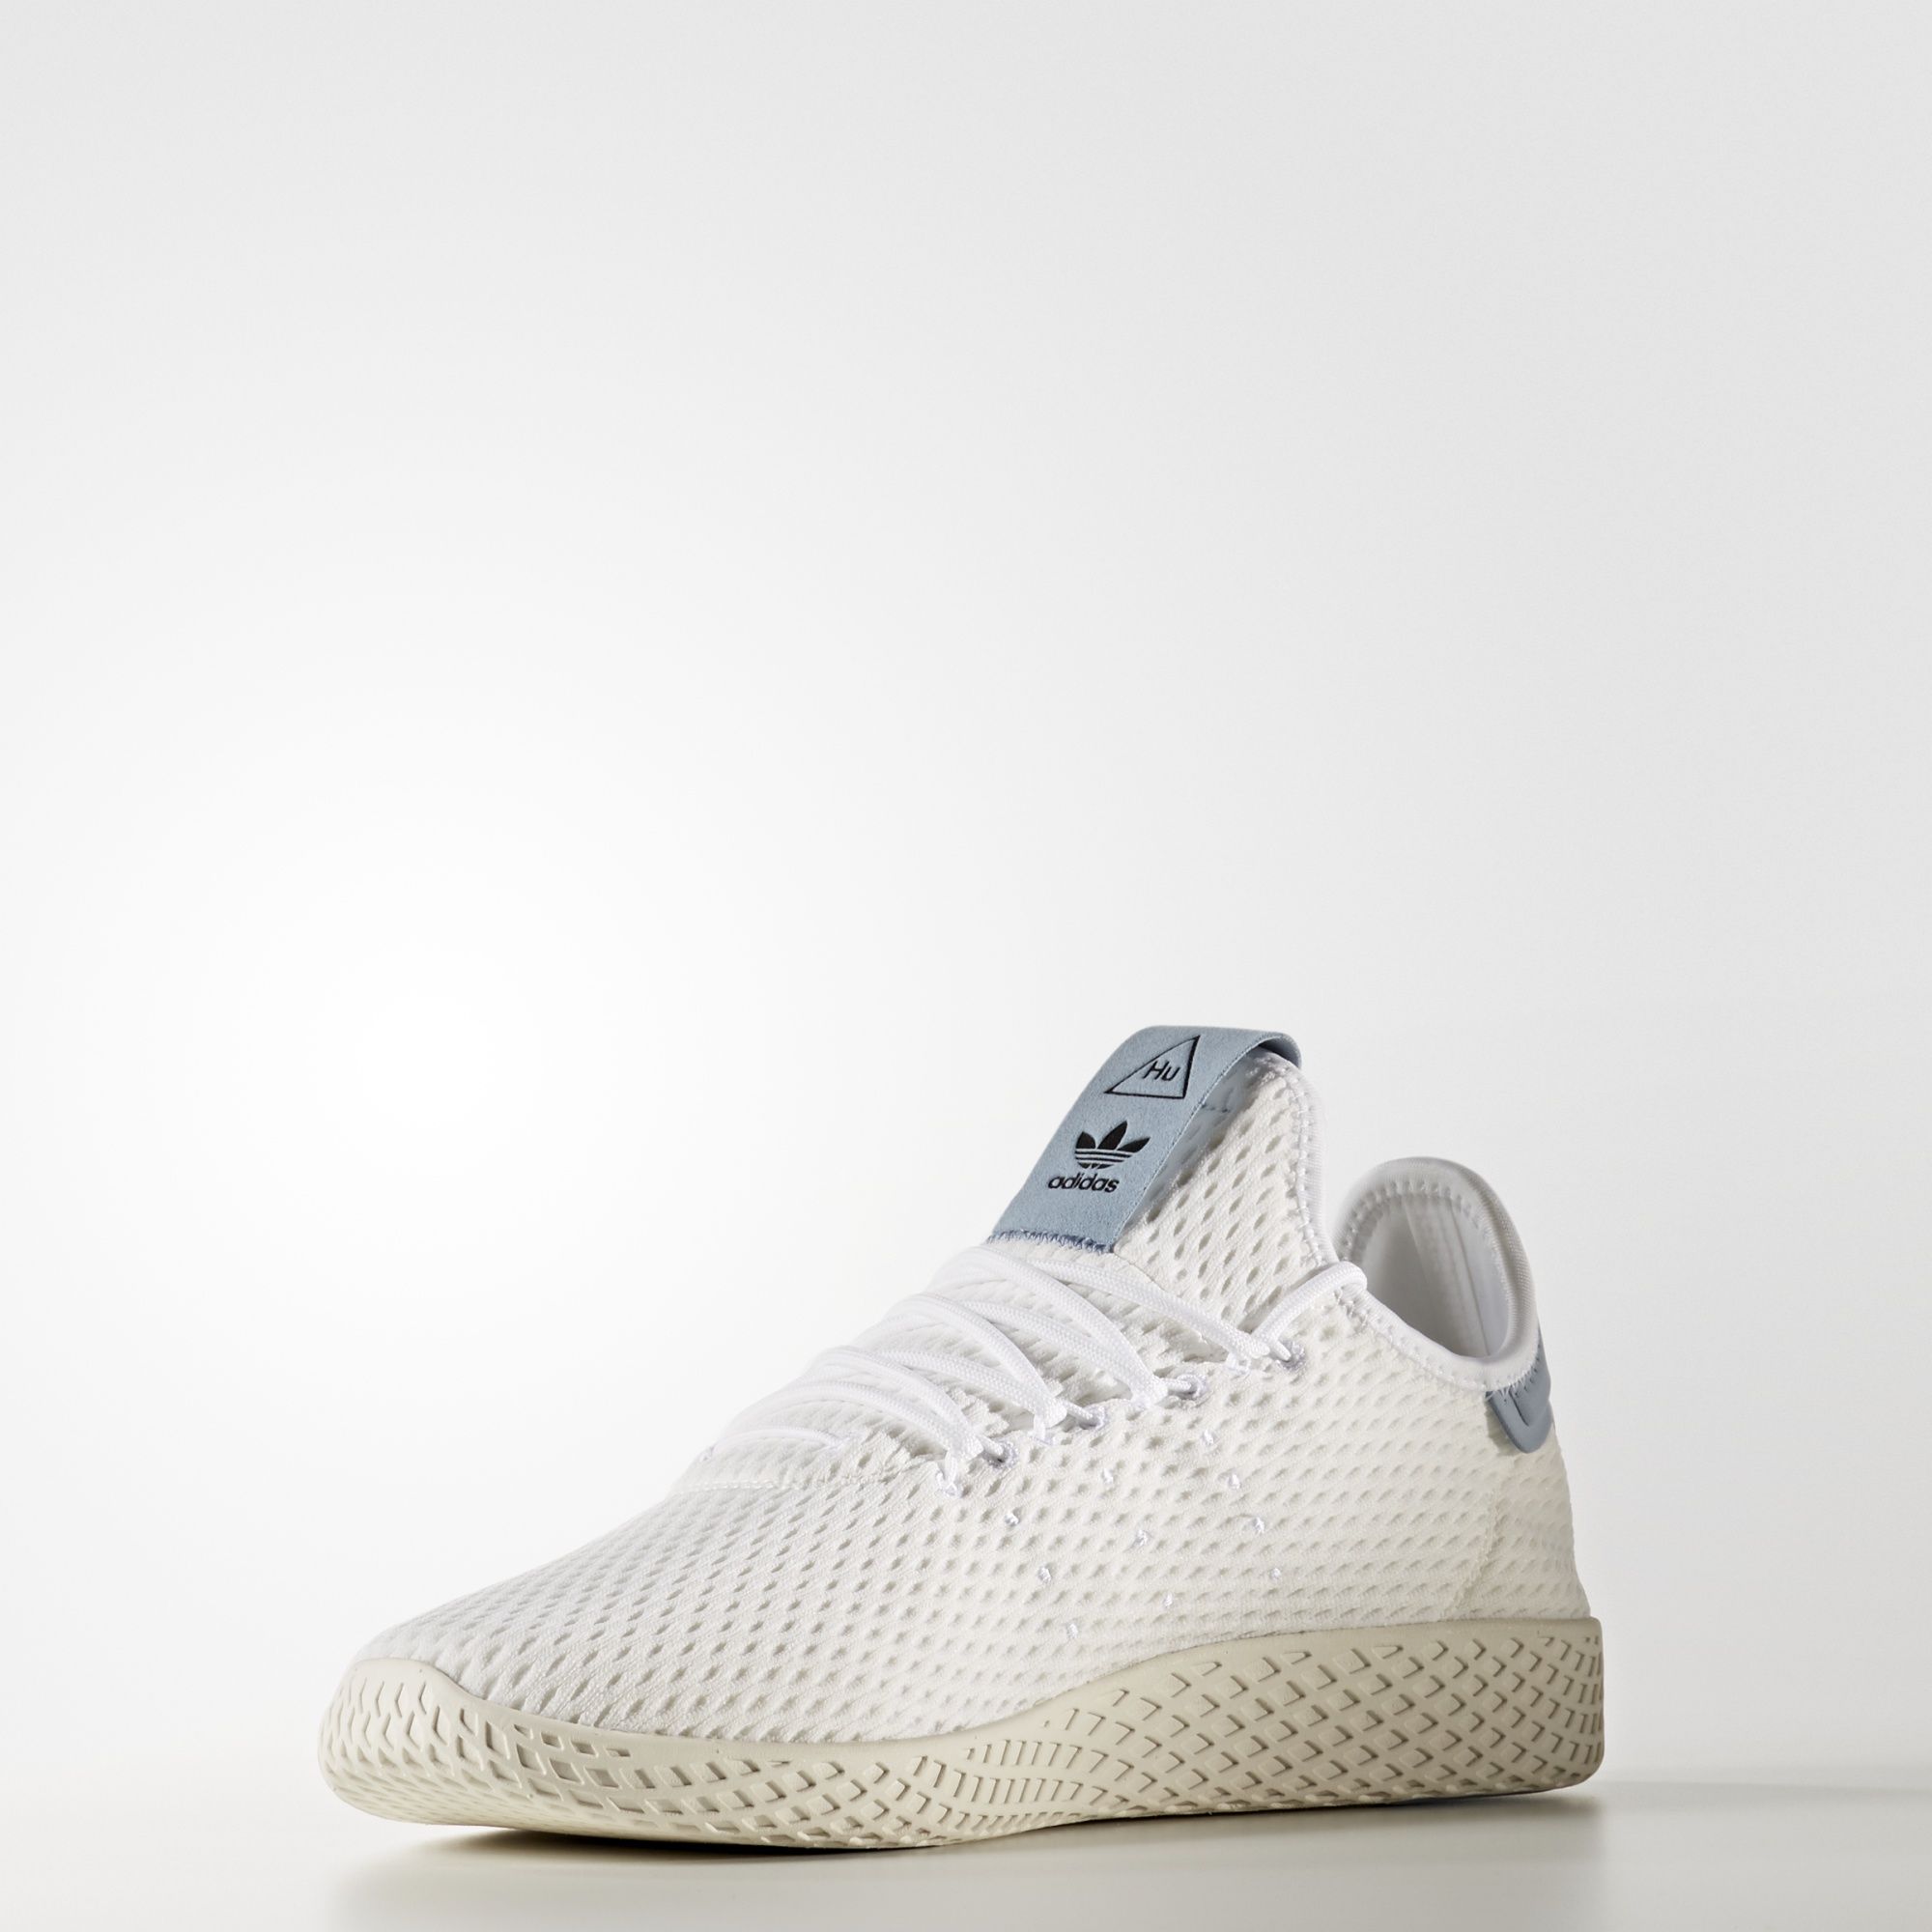 adidas-pharrell-williams-tennis-hu-white-tactile-blue-3